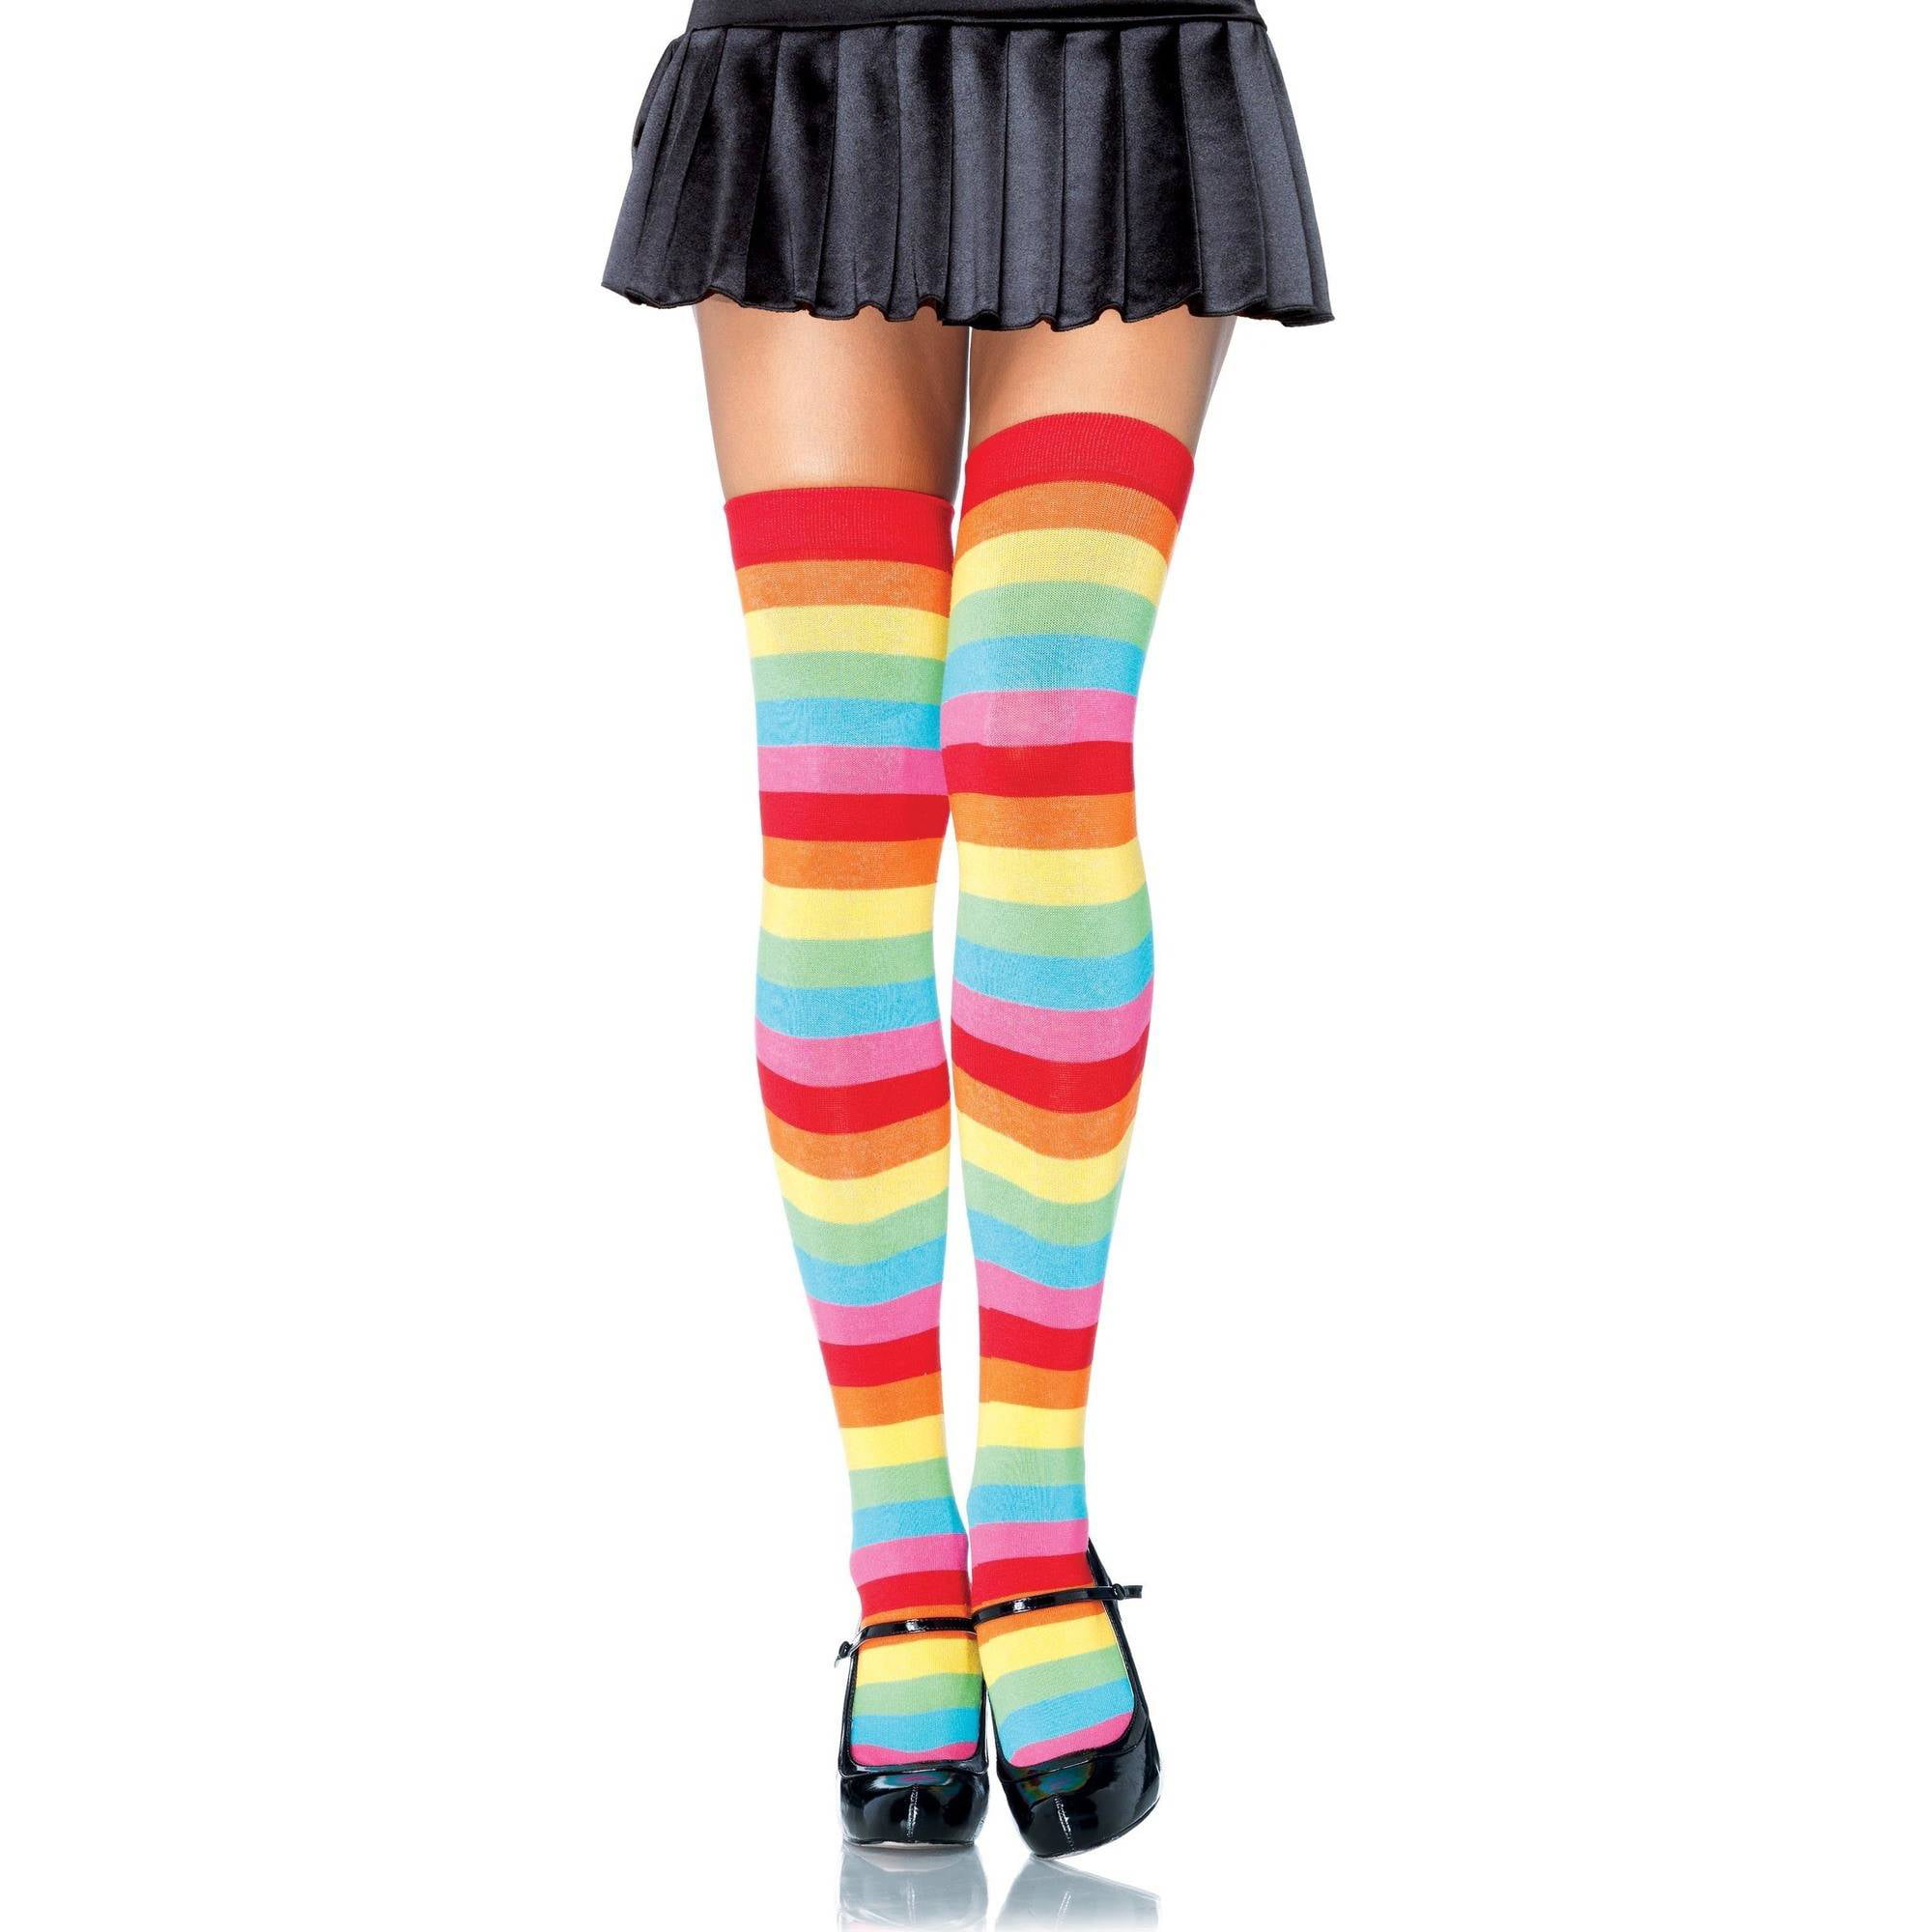 Neon Rainbow Thigh Highs Halloween Costume Accessory - Walmart.com